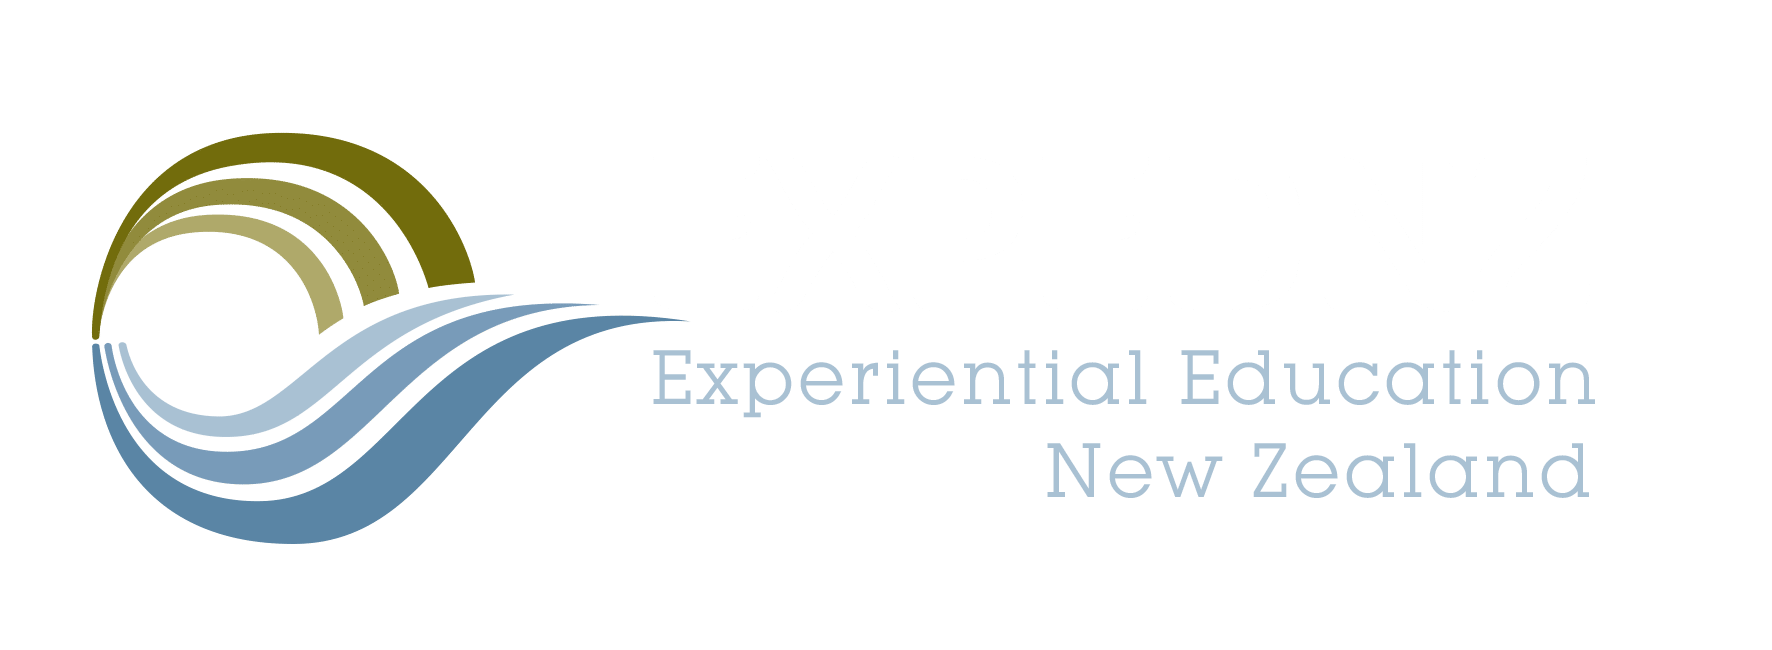 WIO_ExpedNZ-logo